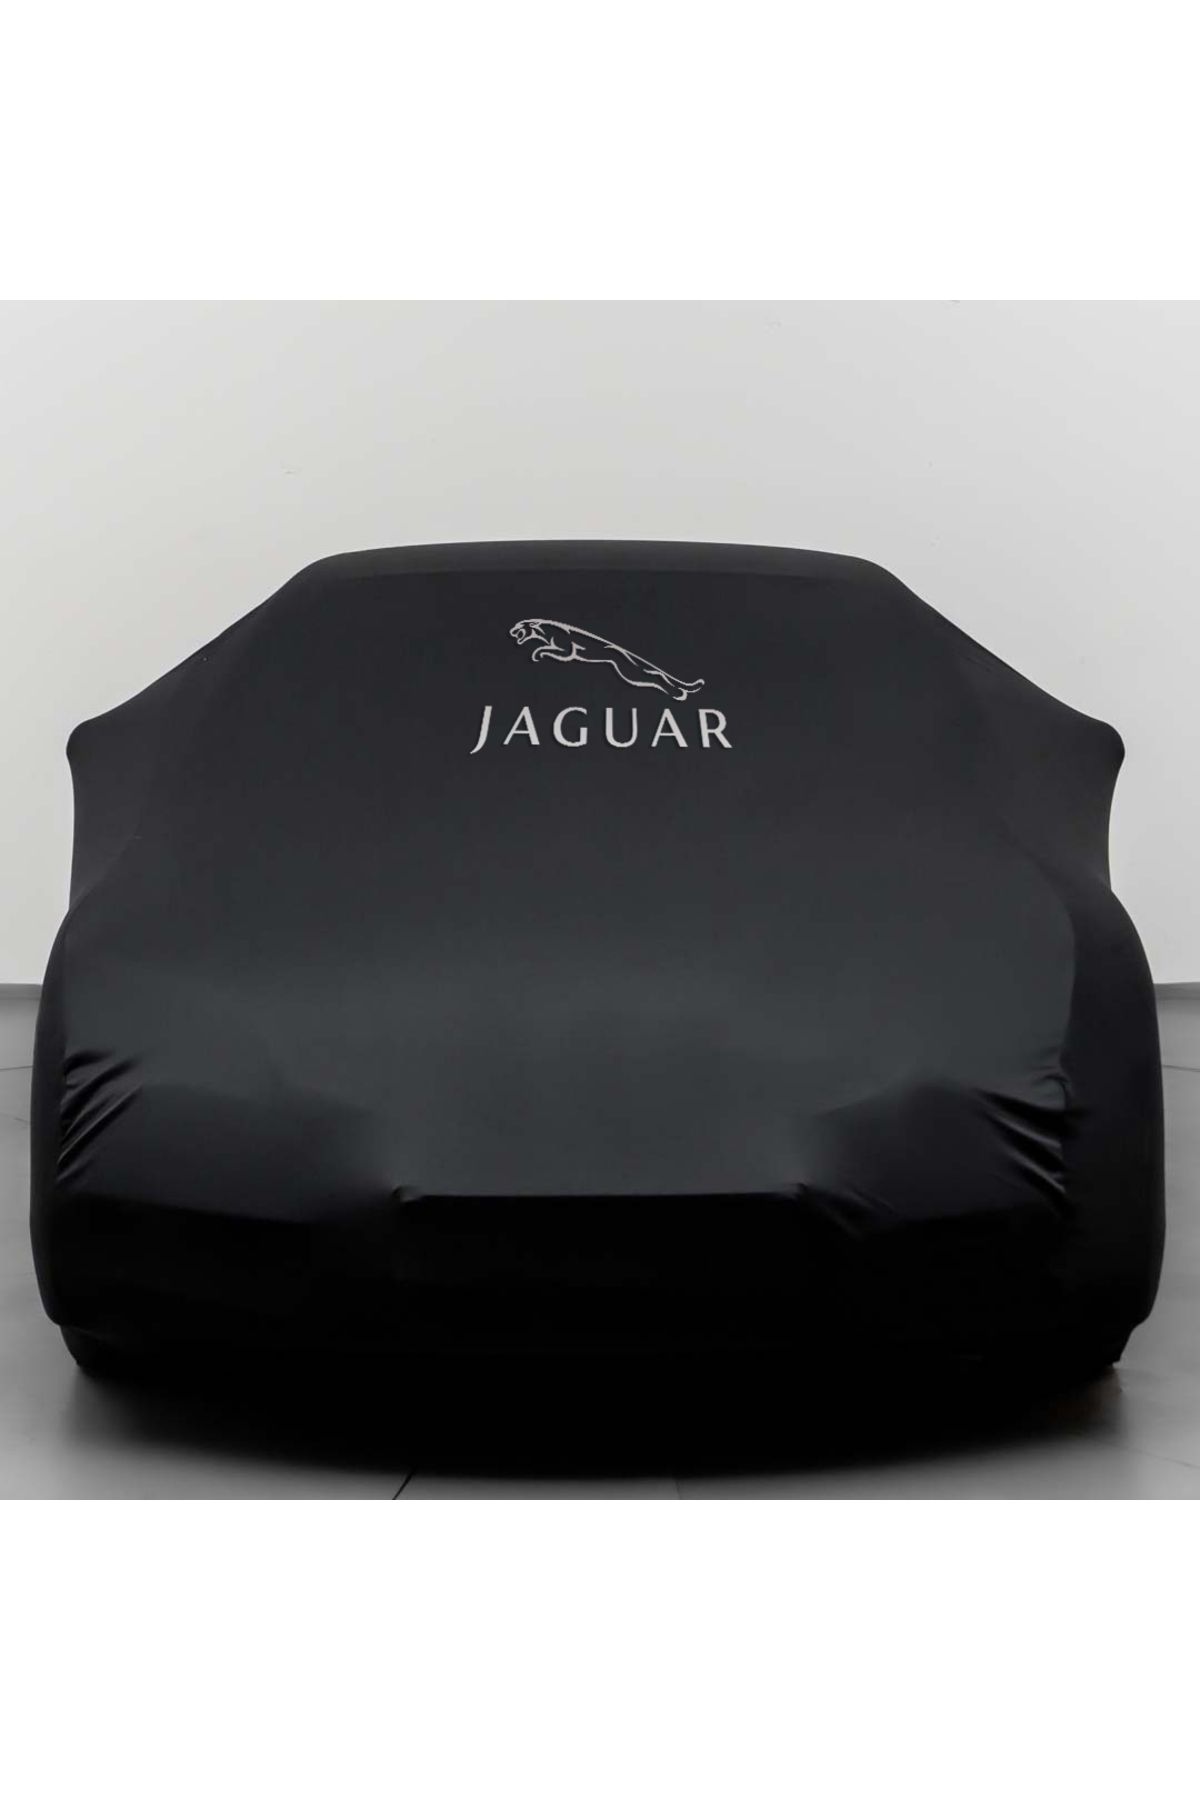 Teksin JAGUAR X-TYPE Fabric Logo Car Tarpaulin - Combed Cotton